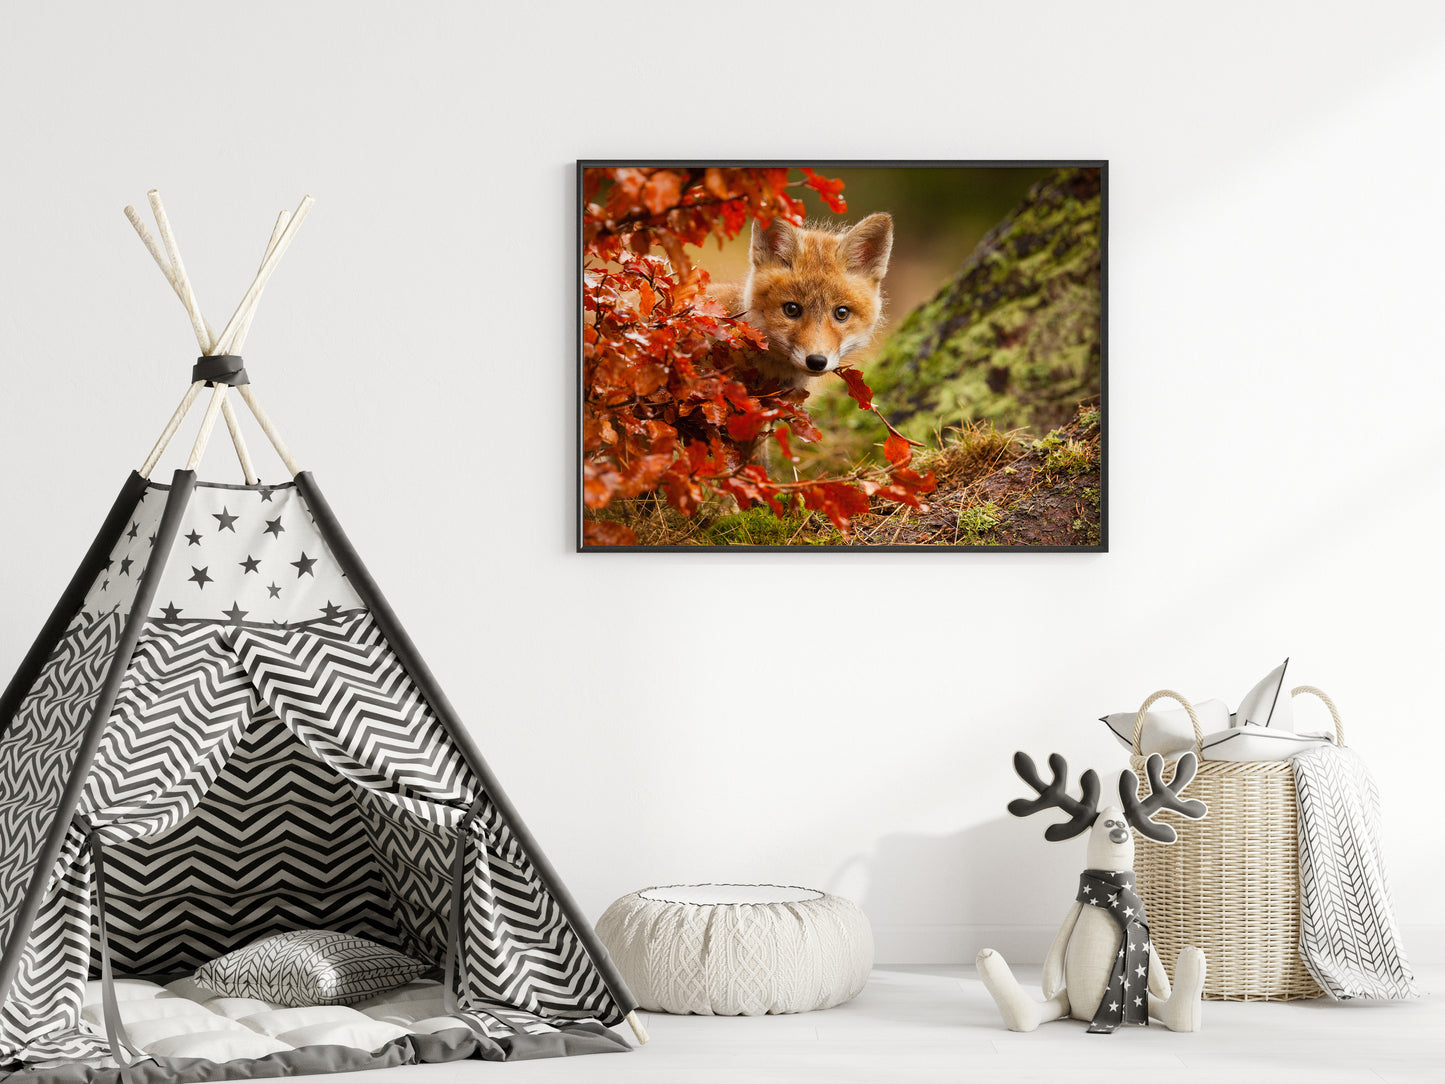 Woodland Animal Nursery Art: Peek-A-Boo Baby Fox Pup And Fall Leaves - Animal / Wildlife / Nature Artwork - Wall Decor - Framed Wall Art Print